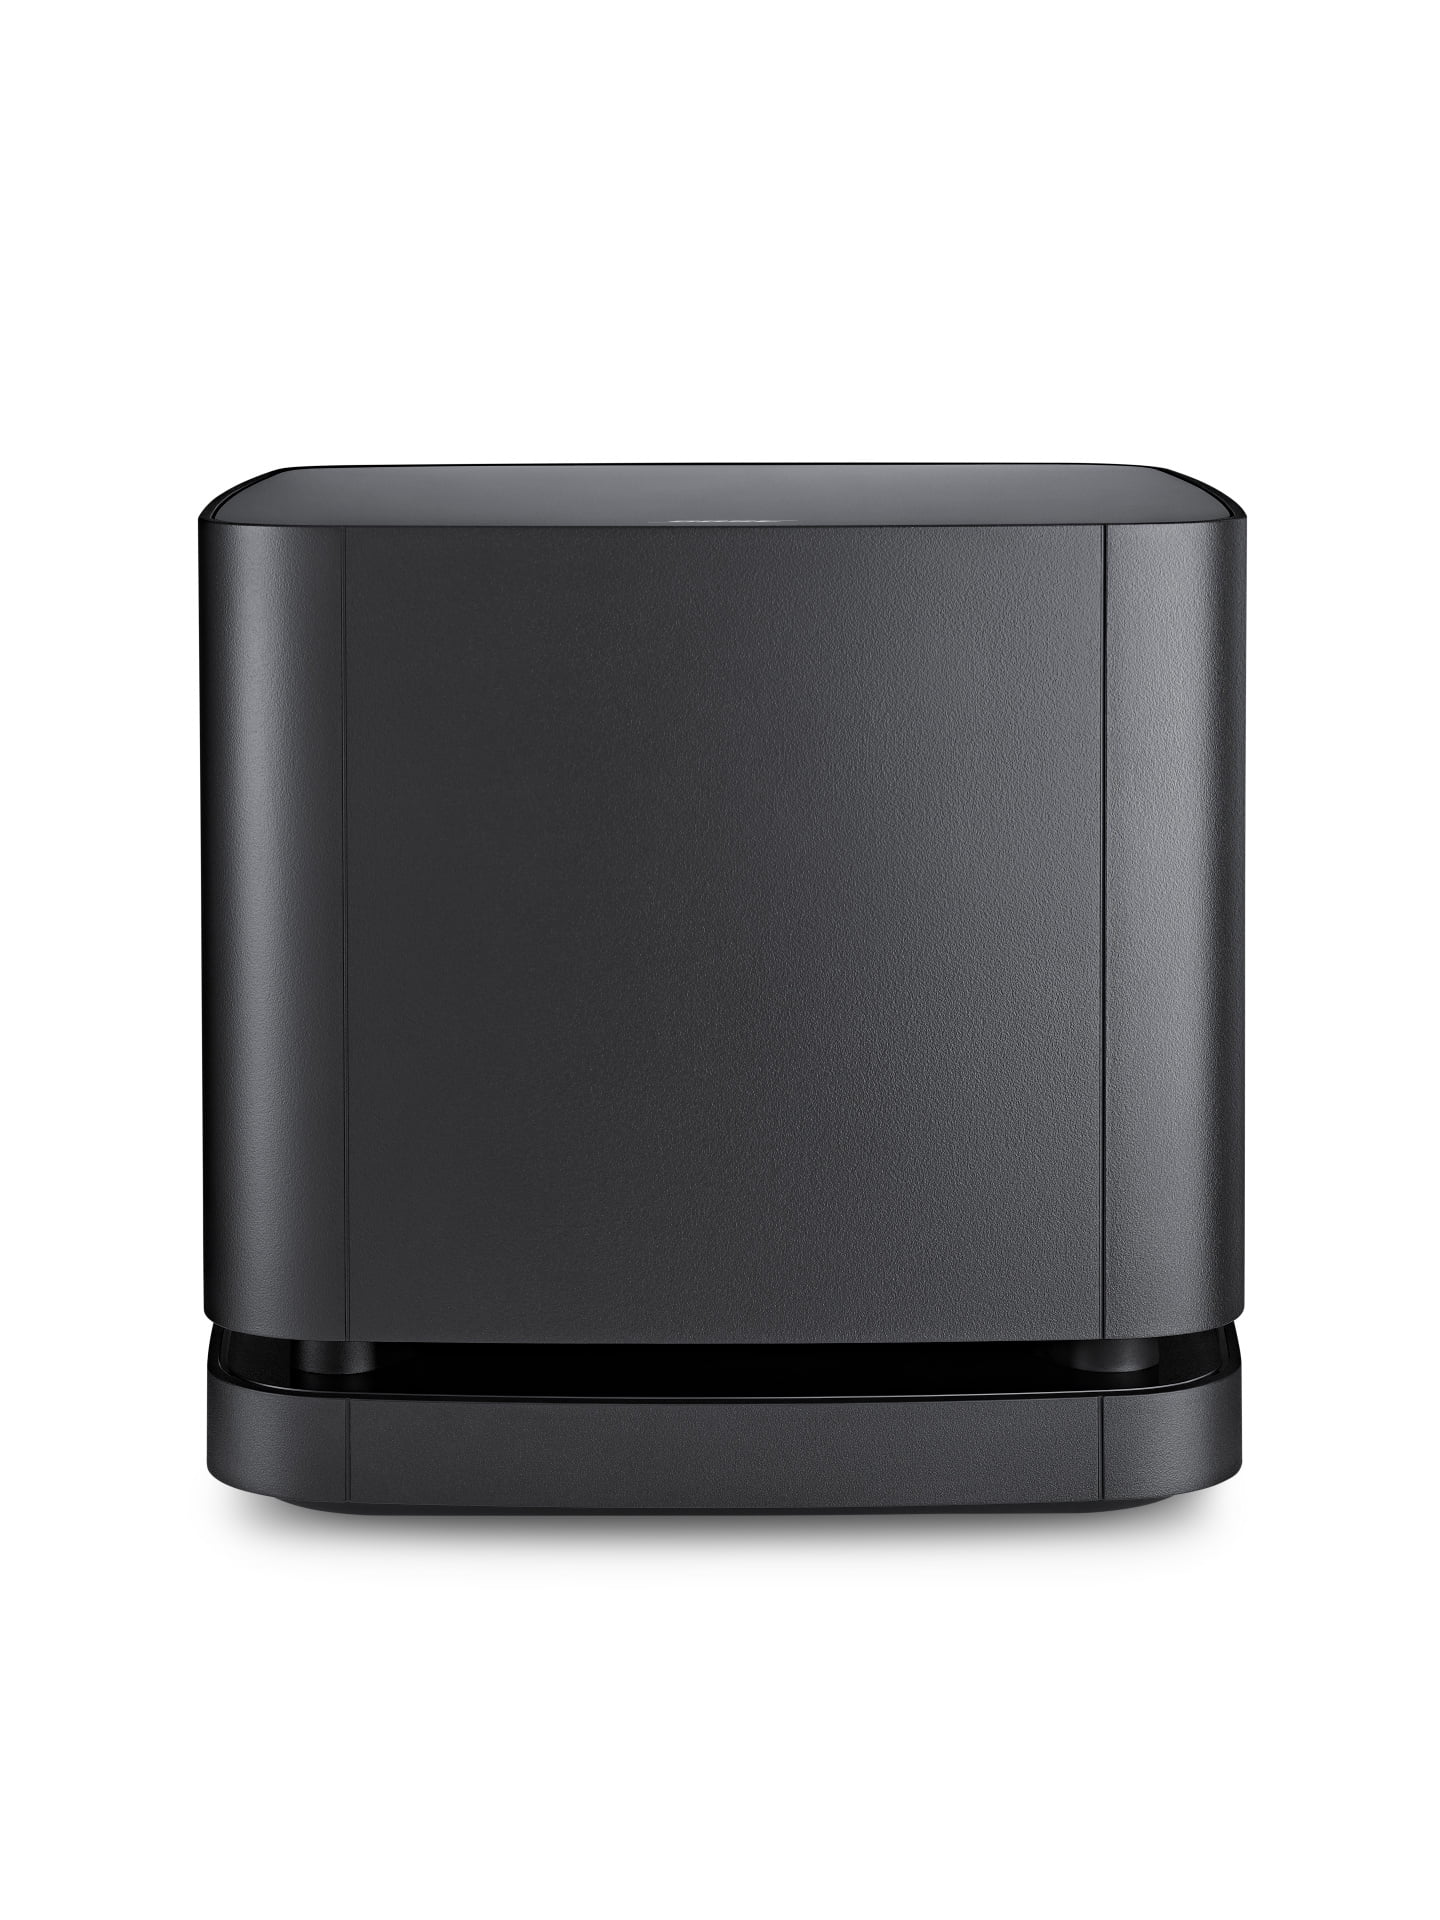 Bose Surround Sound Rear Speakers for Bose Smart Soundbars, Black 